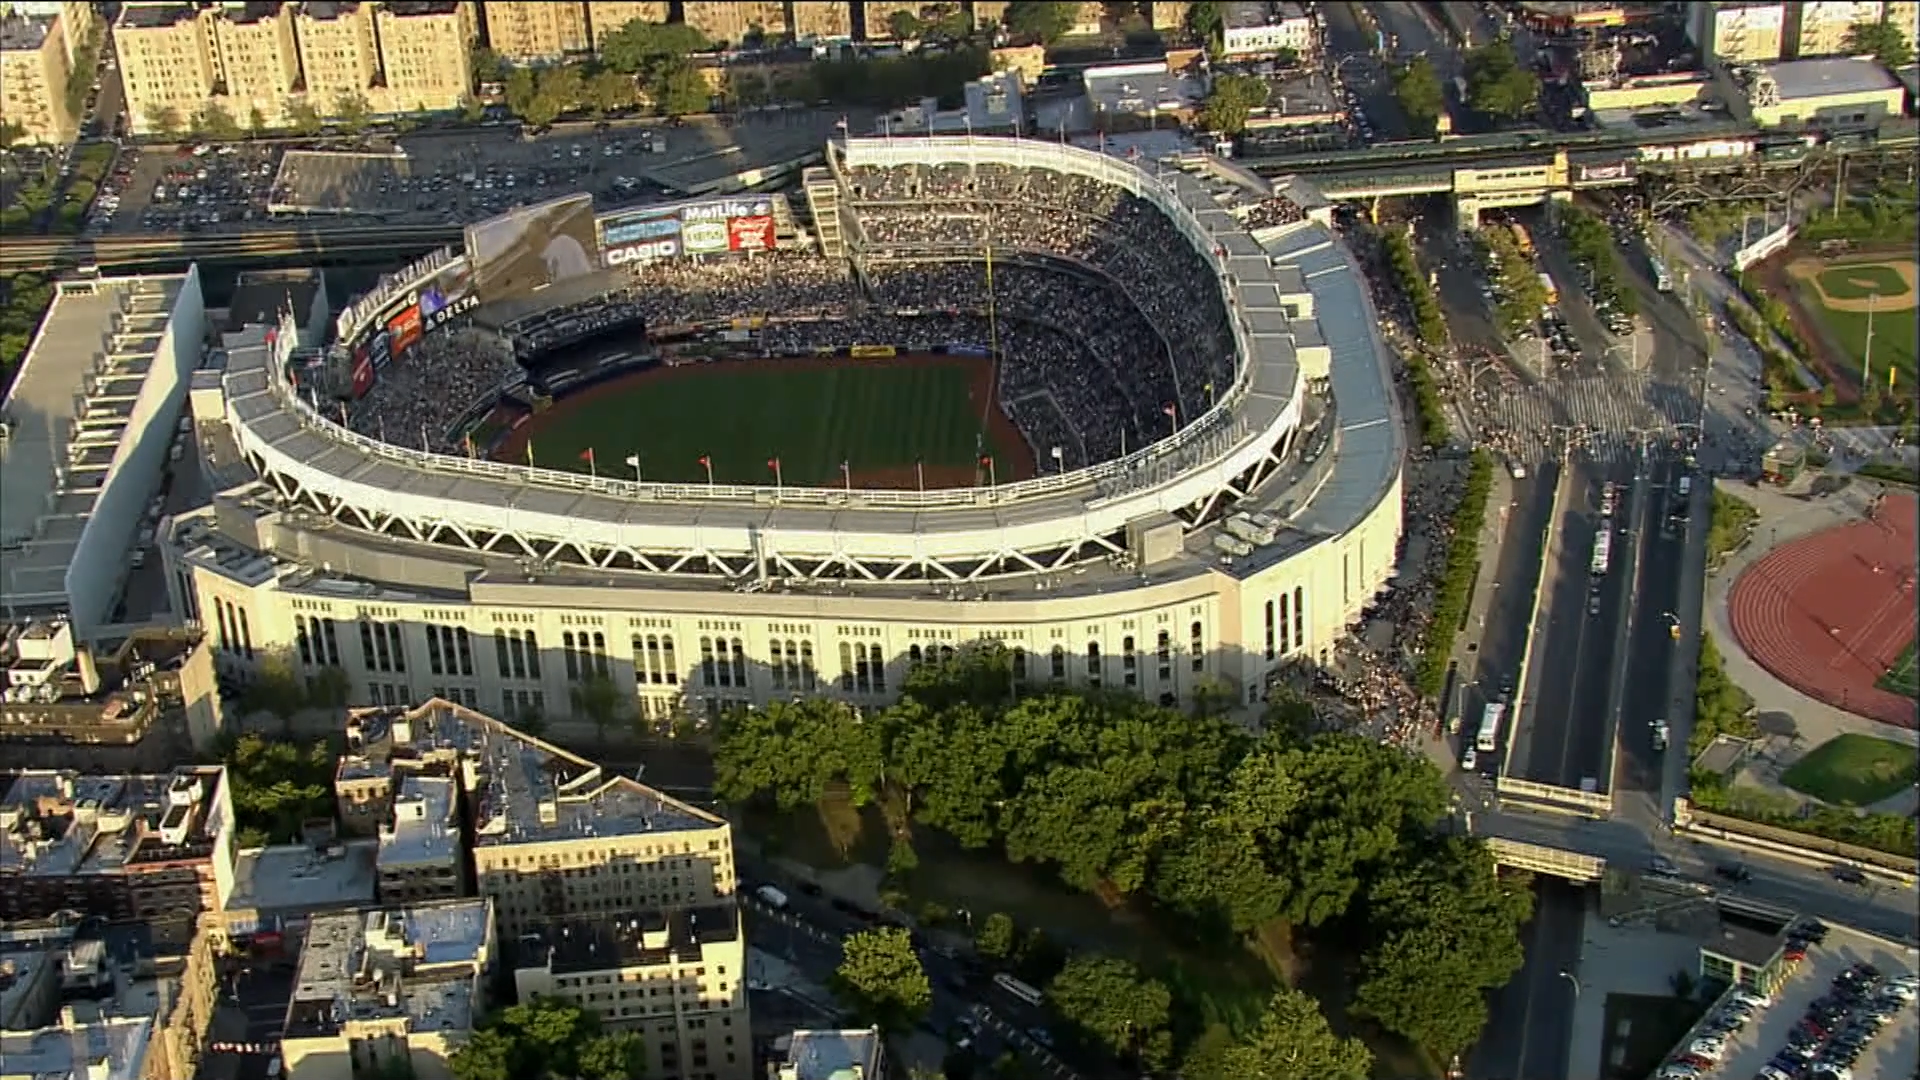 The Image for Yankee Stadium